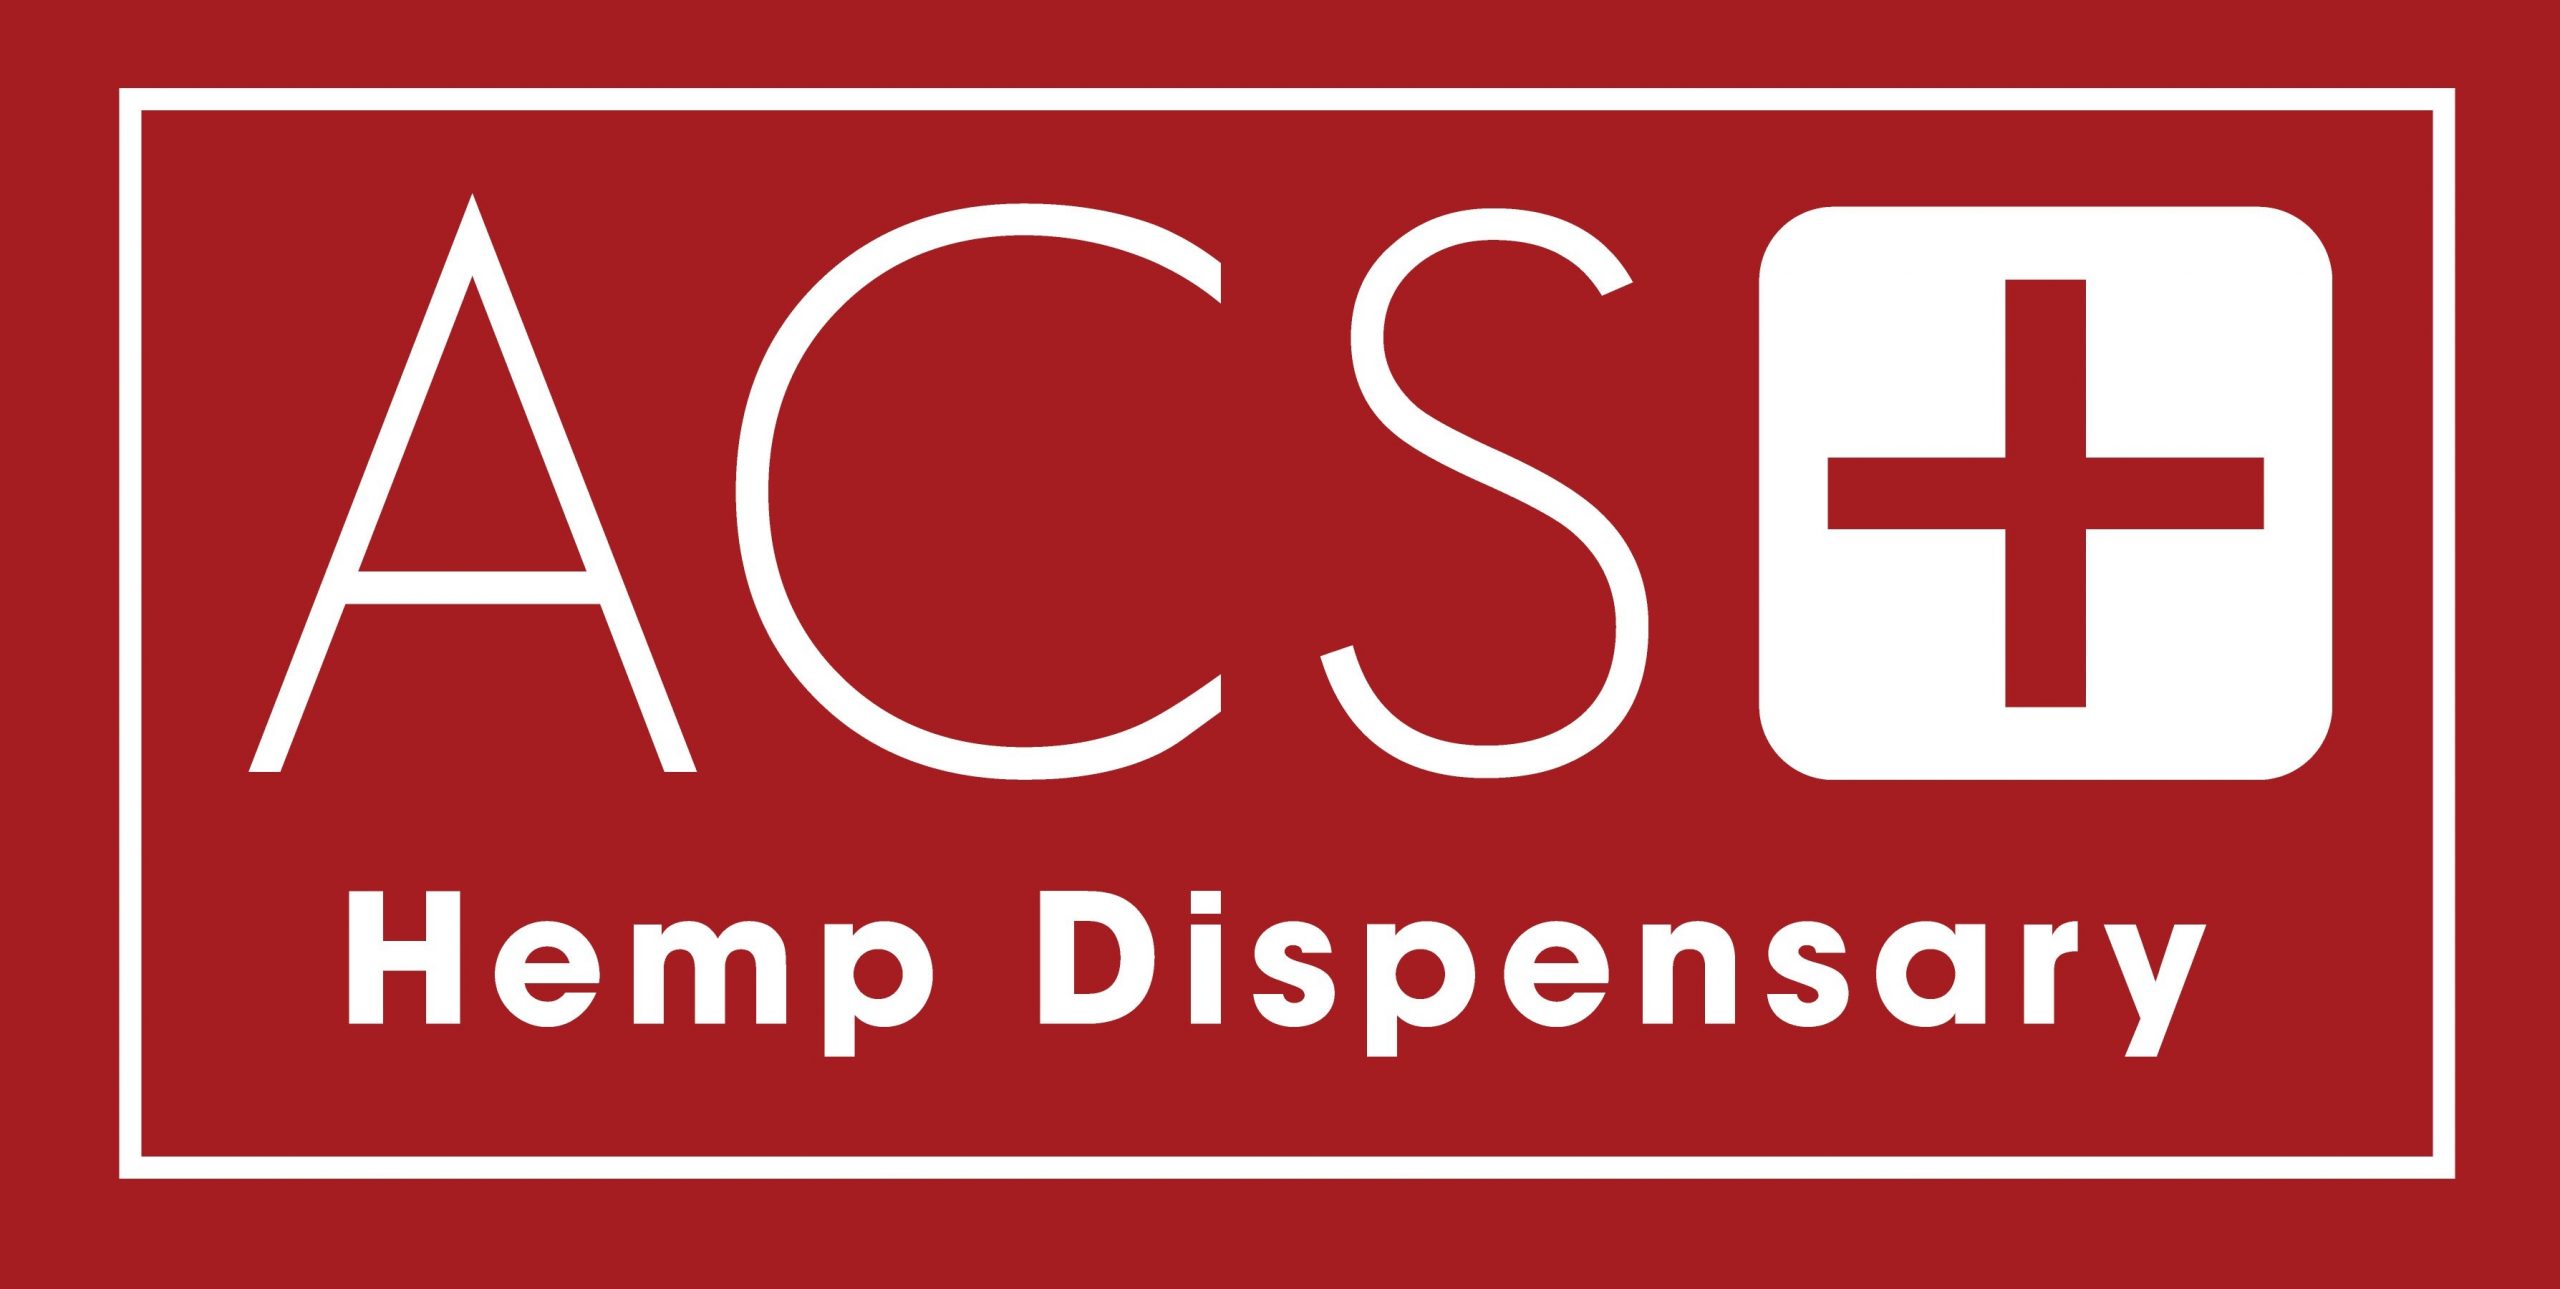 ACS Hemp Dispensary